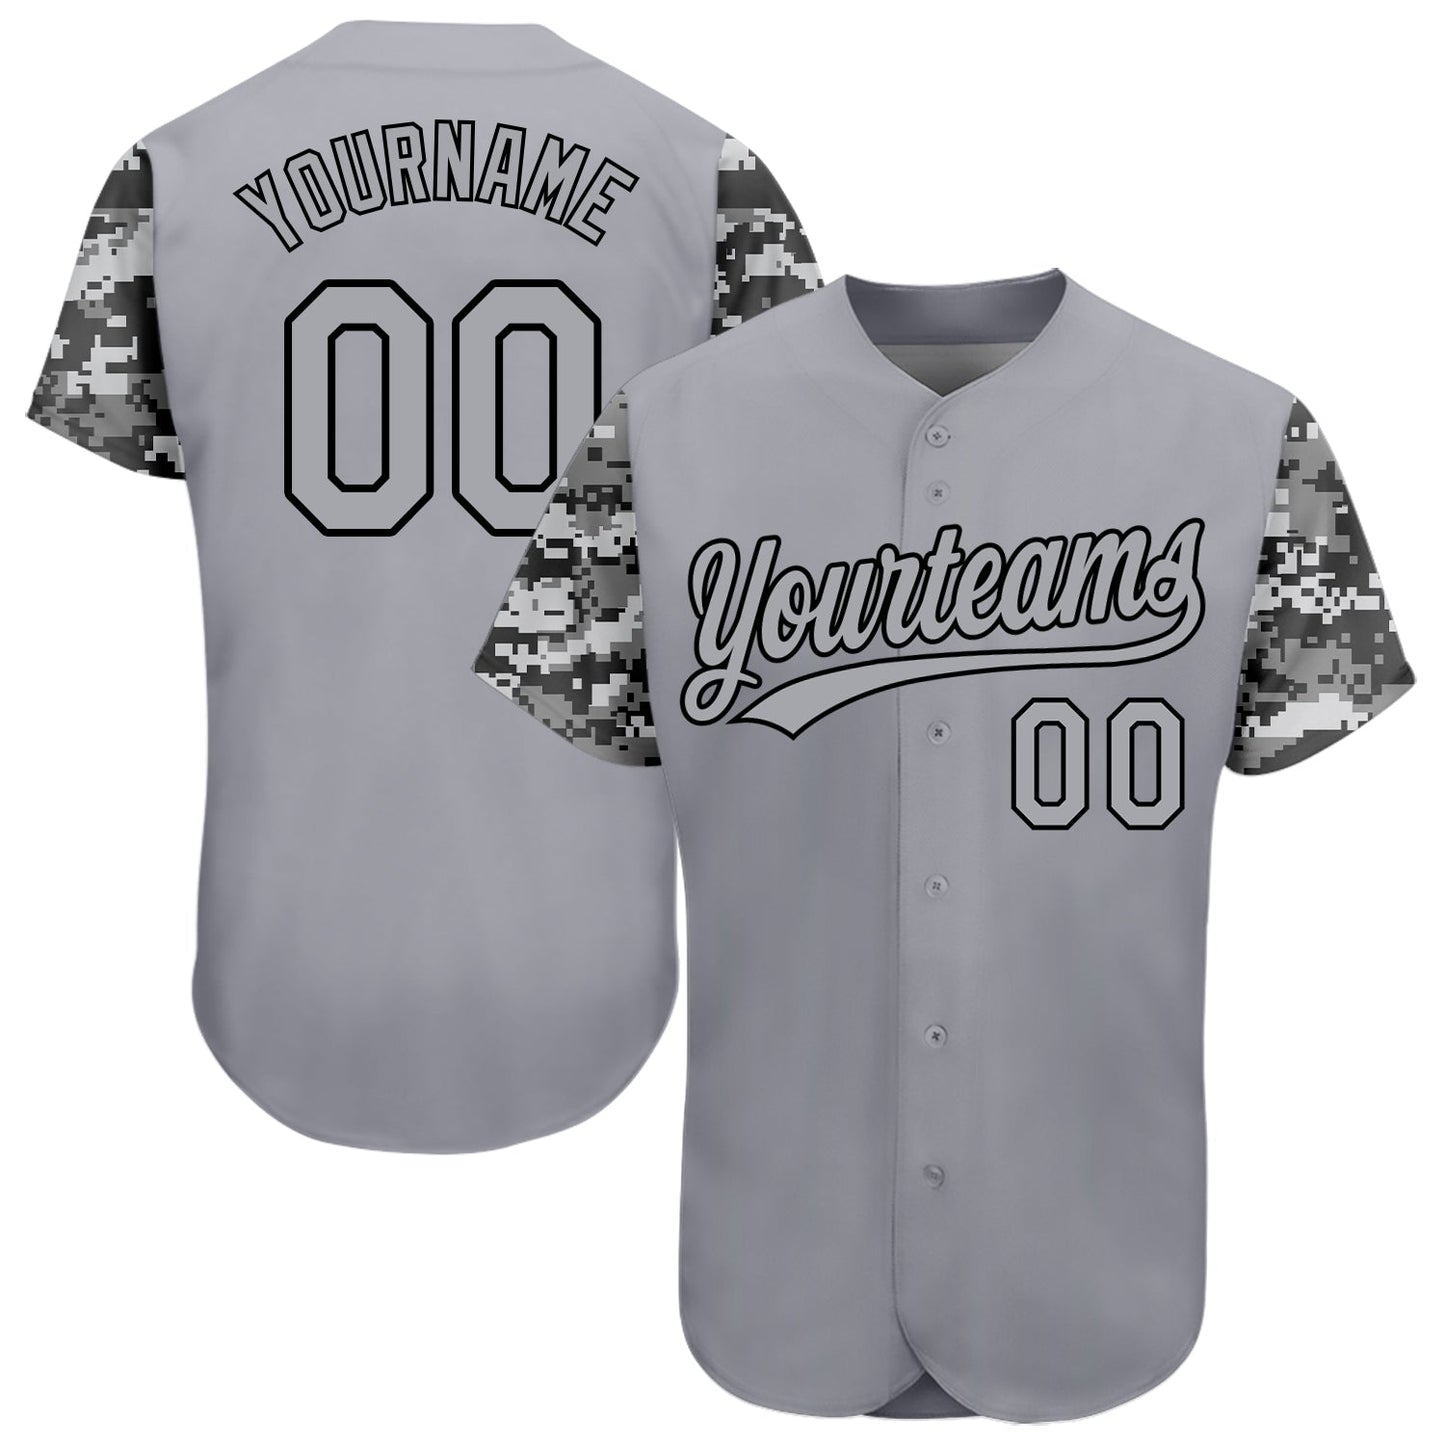 Custom Gray Gray Black-Camo 3D Pattern Design Authentic Baseball Jersey